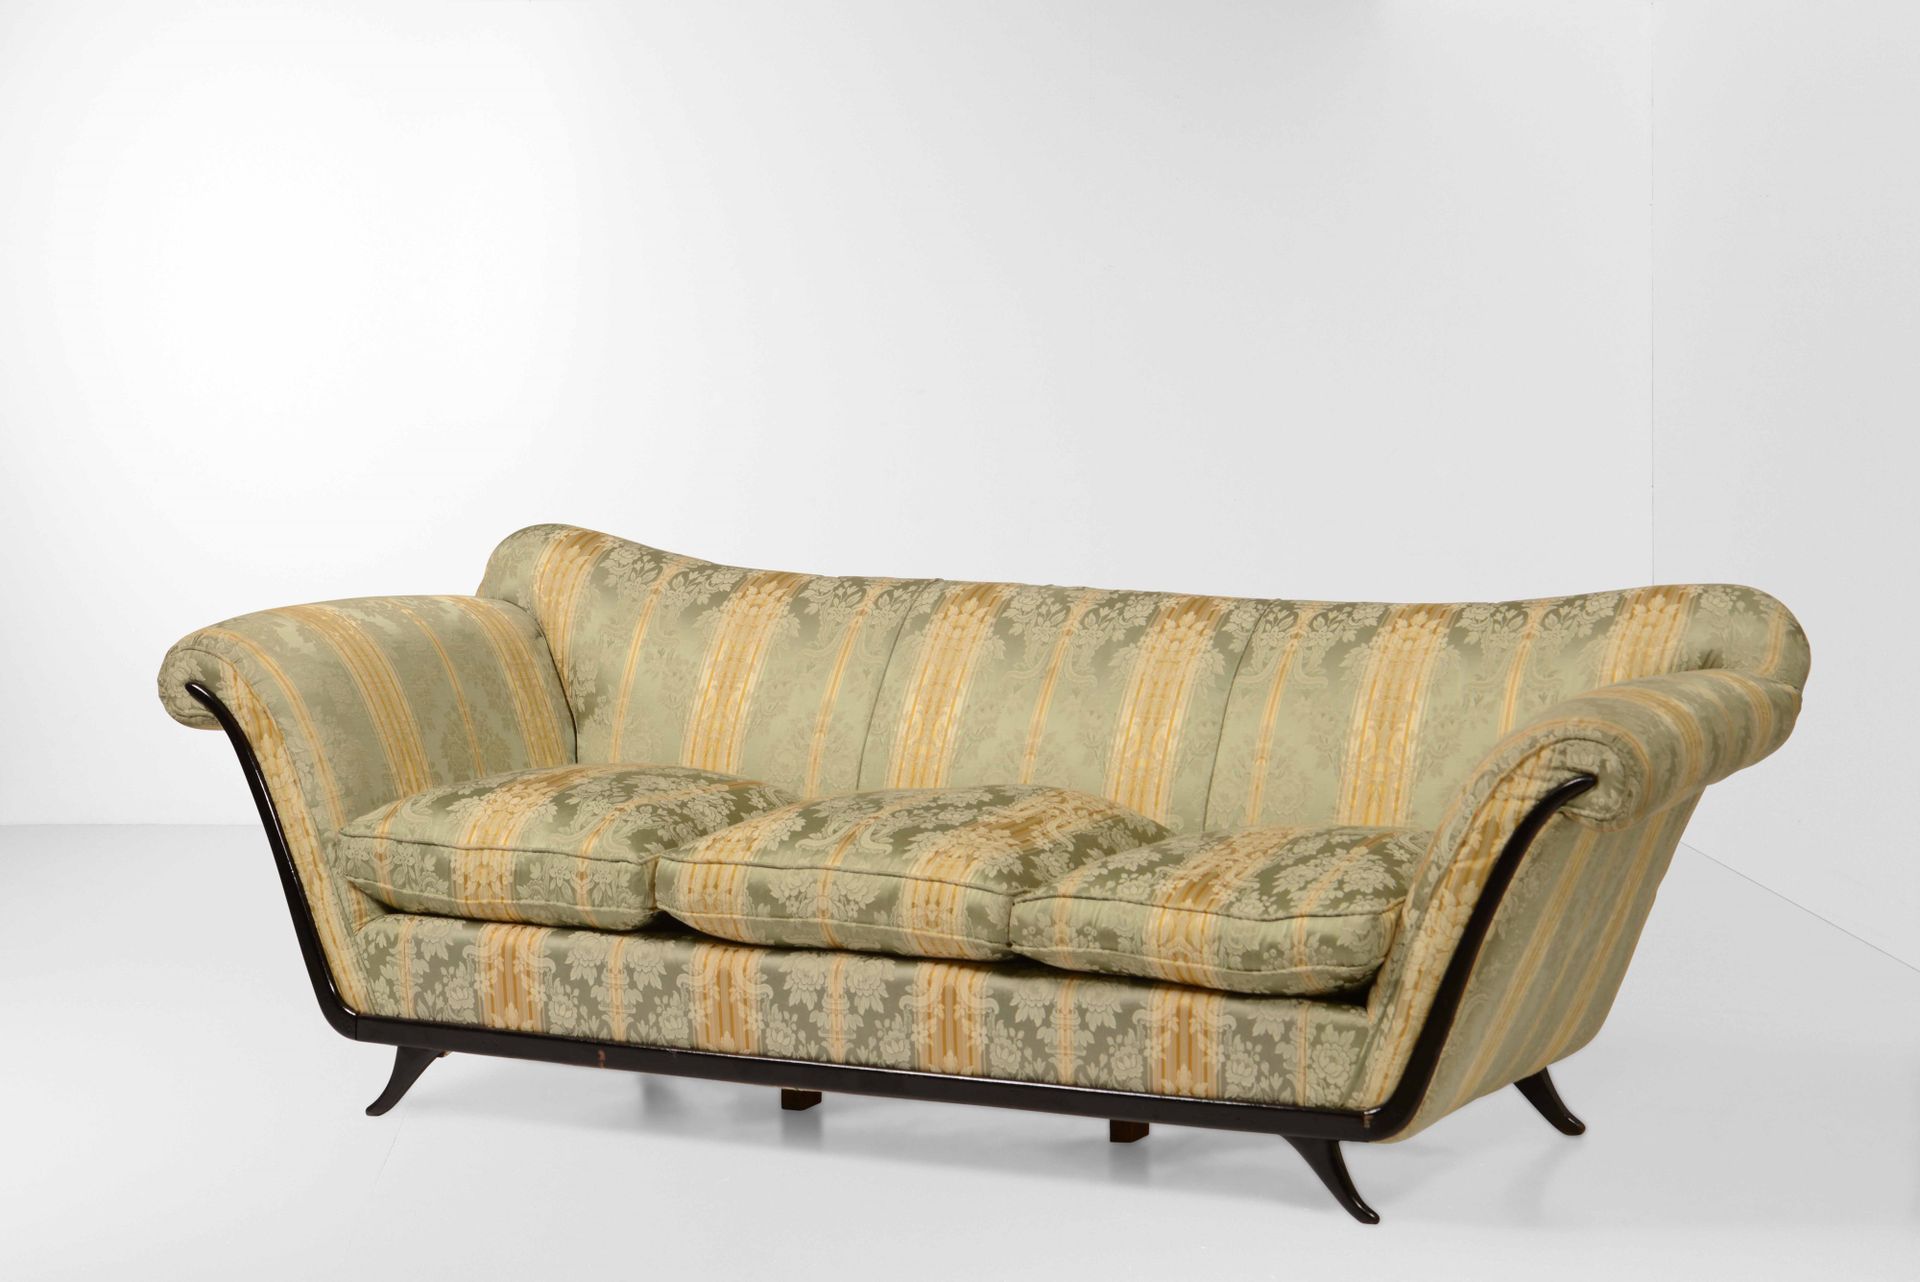 Guglielmo Ulrich (nello stile di), 木质框架的沙发，织物覆盖物和铜质细节。意大利制造，约1950年，cm 233x85x80